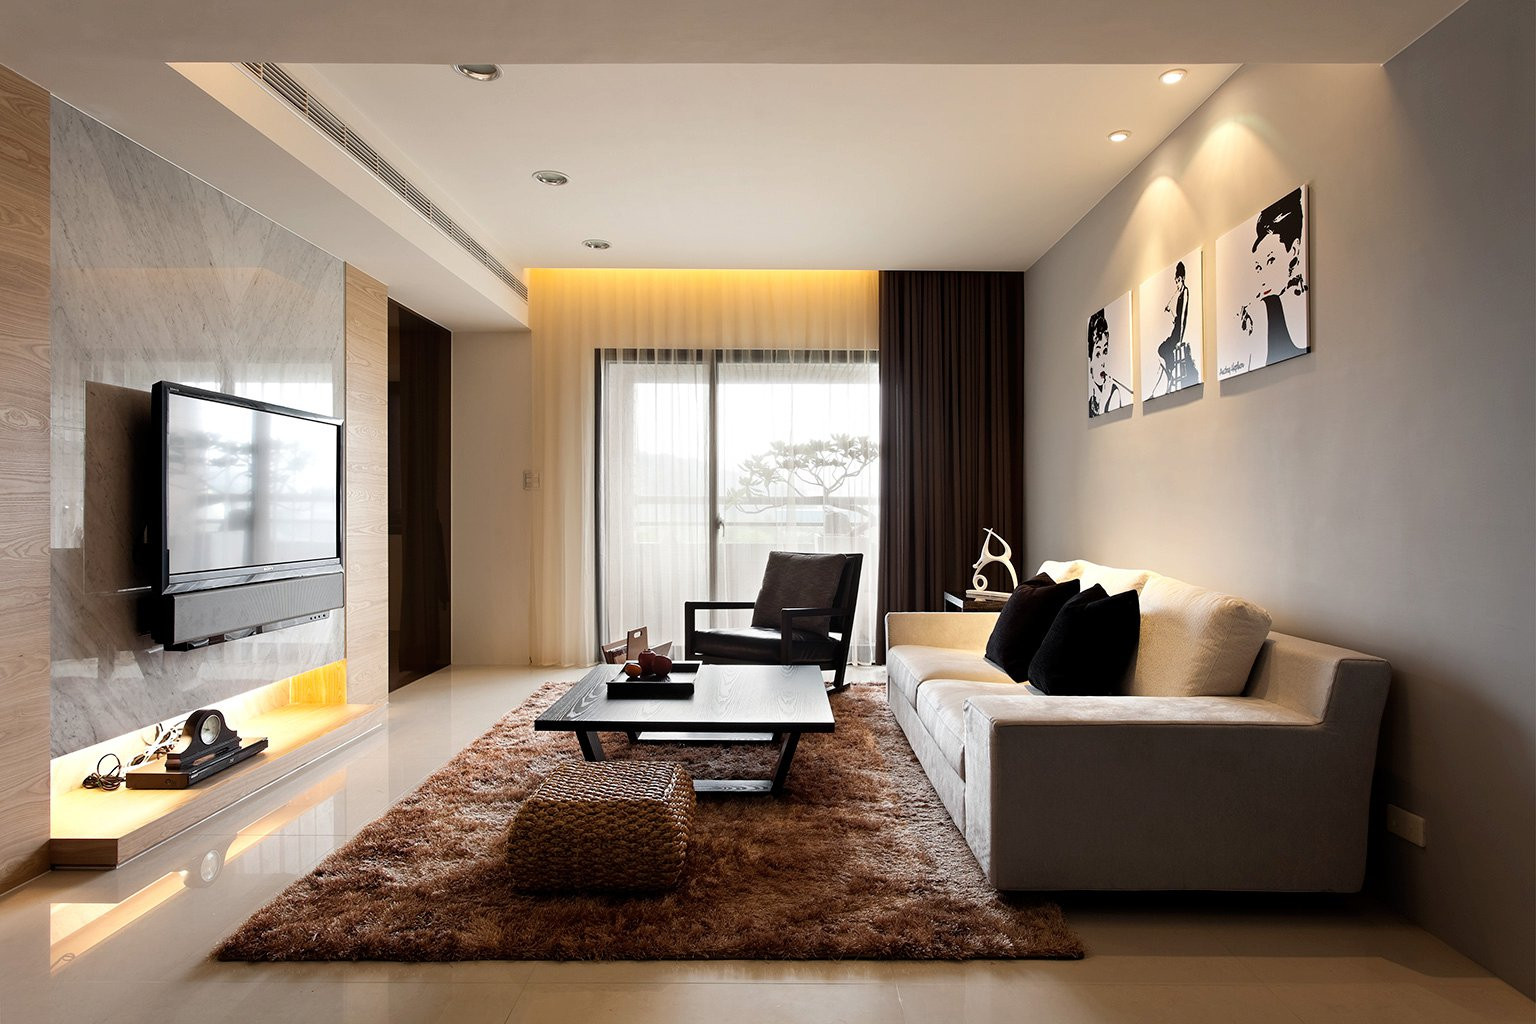 Modern Art For Living Room
 Modern Minimalist Decor with a Homey Flow